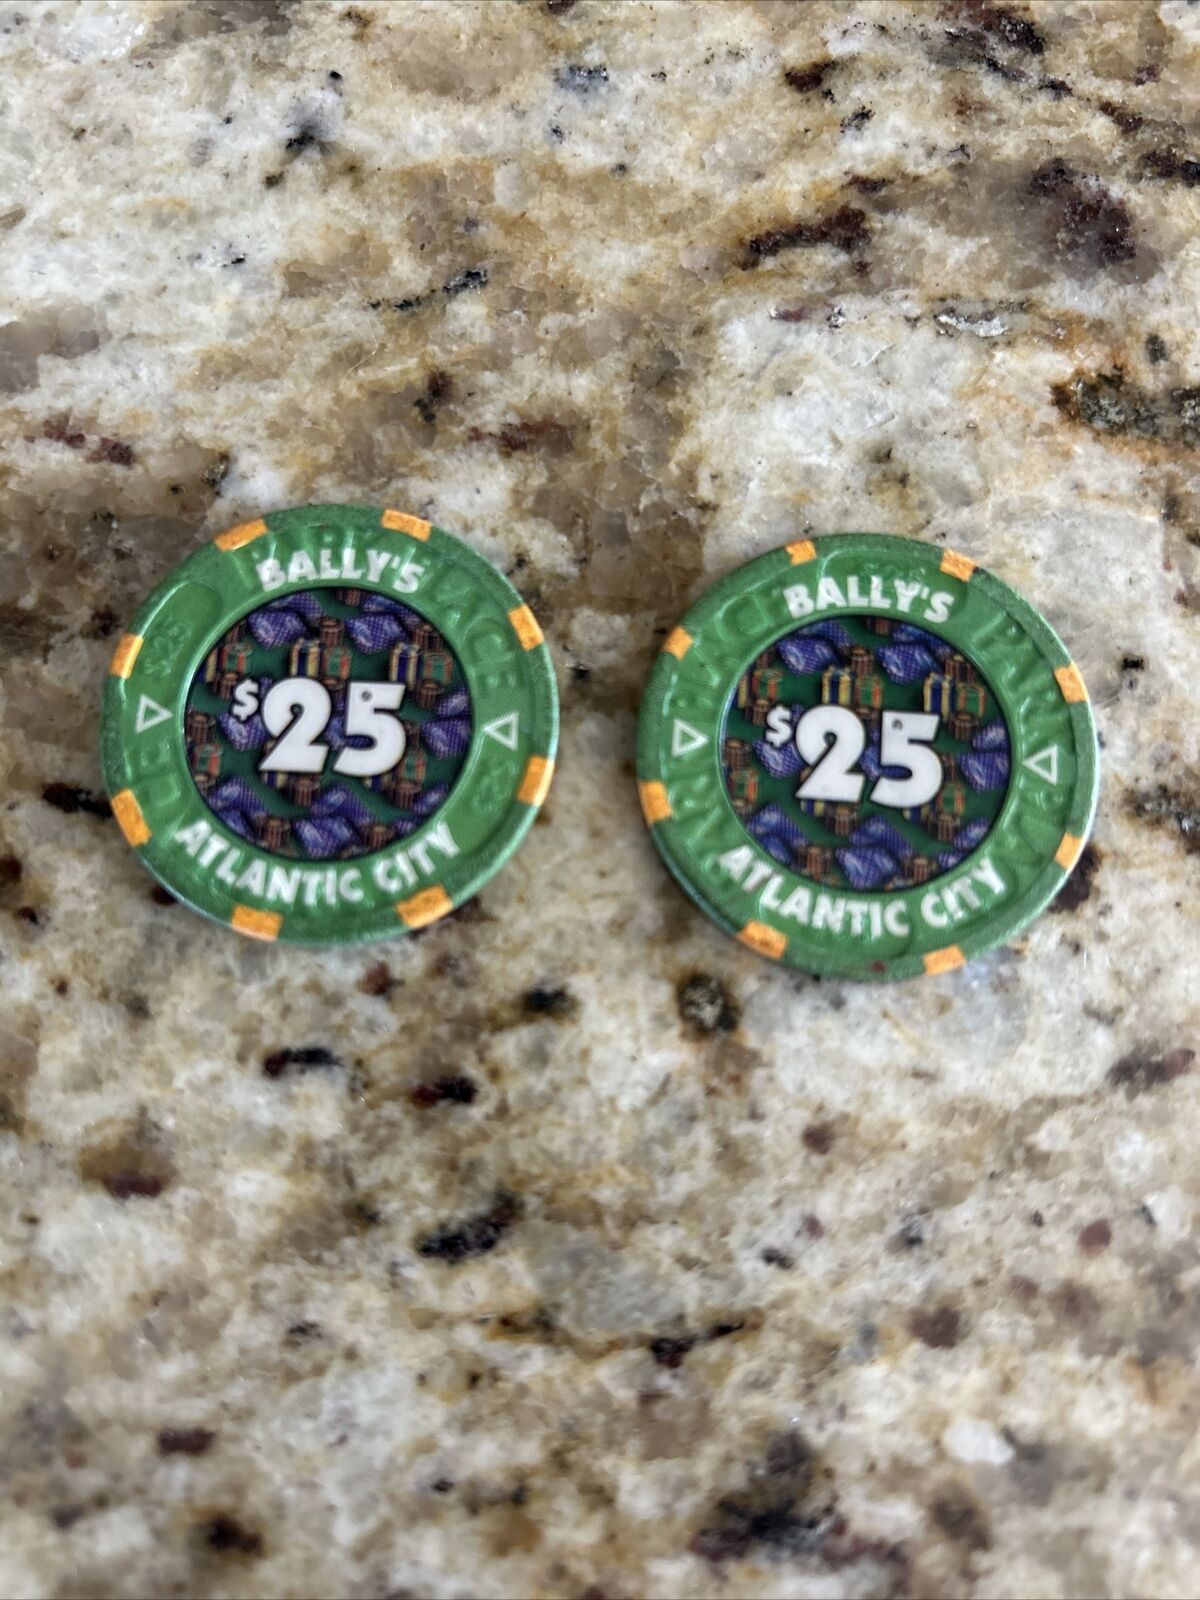 (2) $25 Bally’s Atlantic City New Jersey Casino Chips Authentic